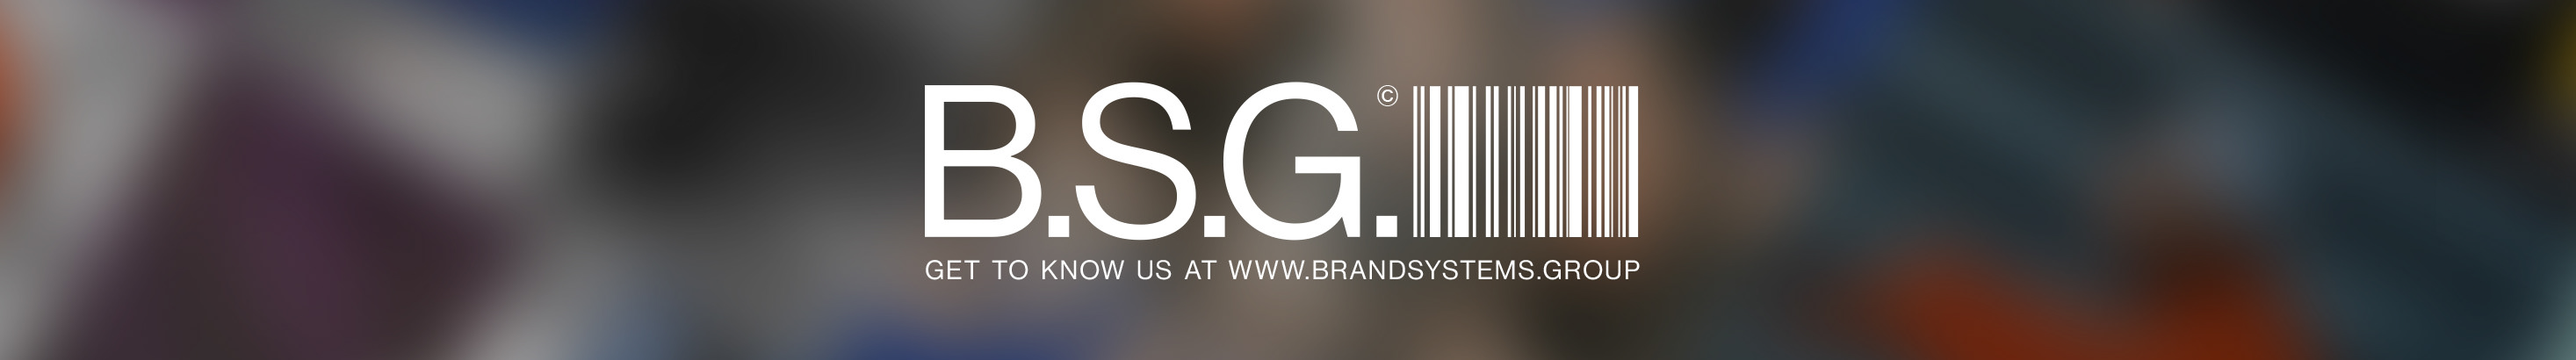 BRAND.S.G. Studio's profile banner